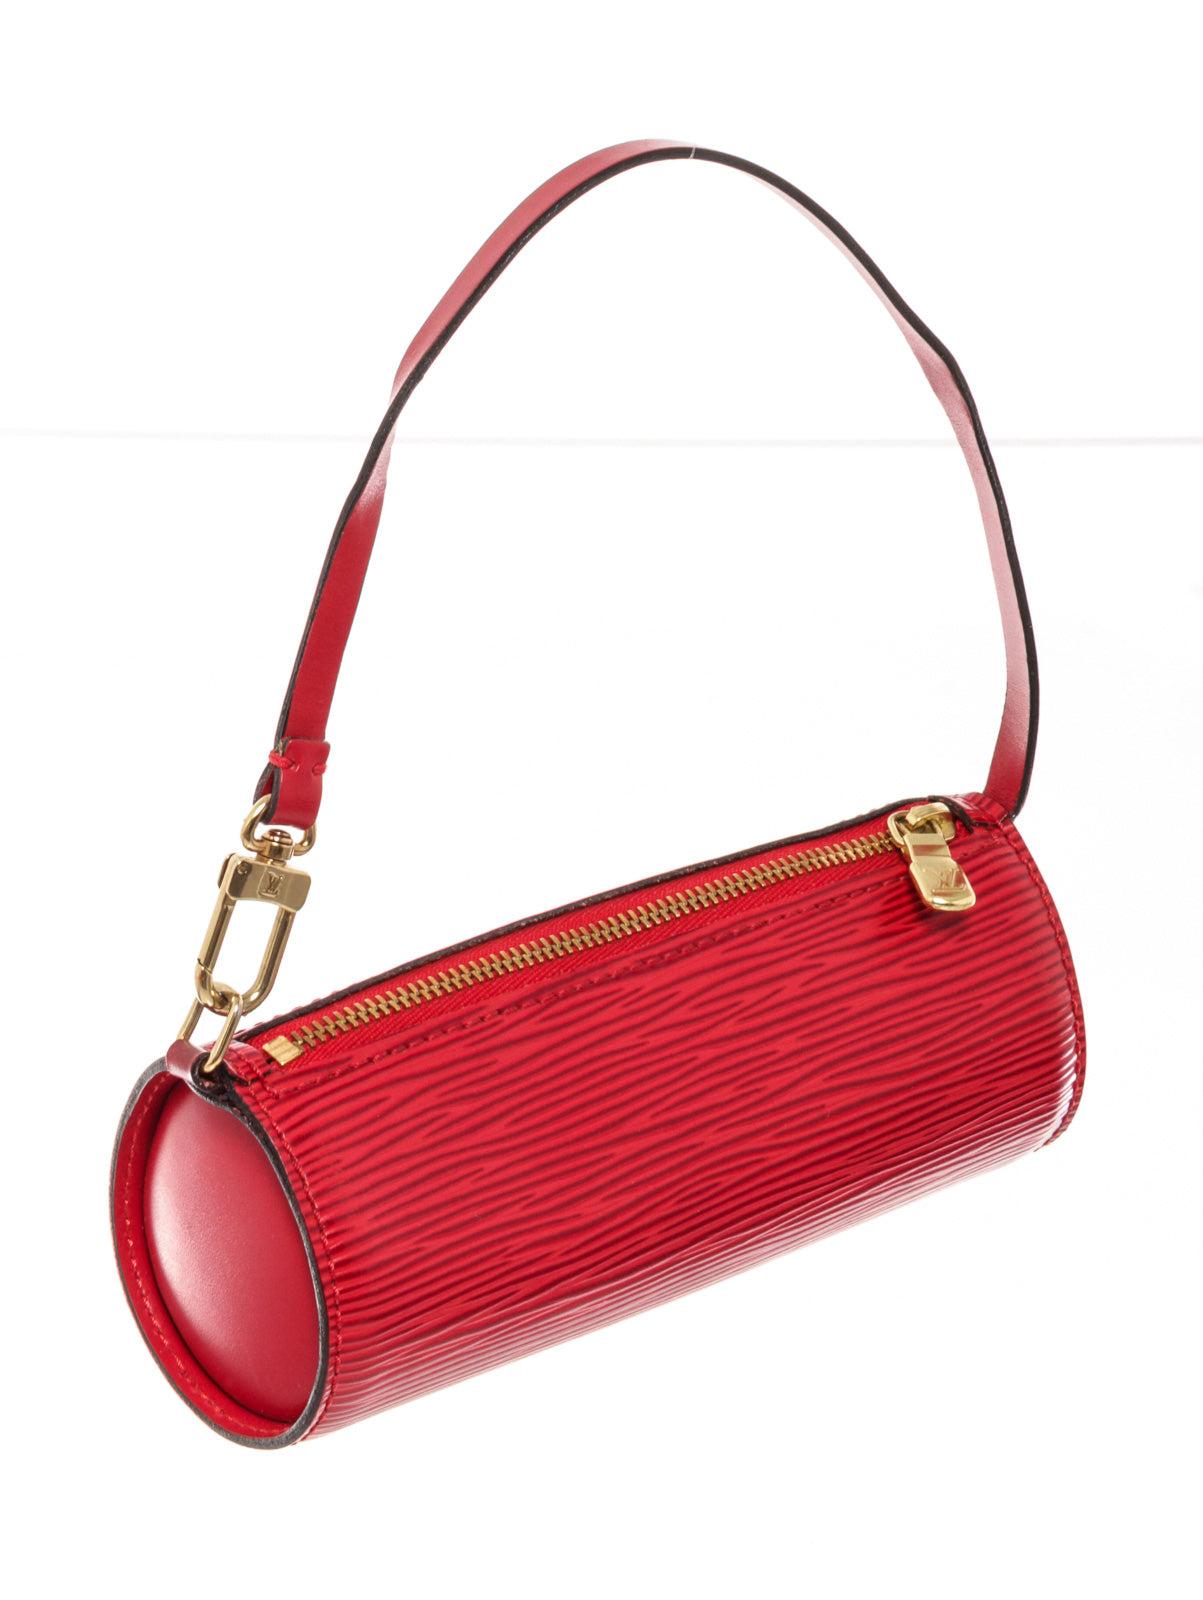 Louis Vuitton Red Epi Leather Mini Papillon Shoulder Bag with epi leather gold-tone hardware, trim tan vachetta leather and zipper closure.
61171MSC